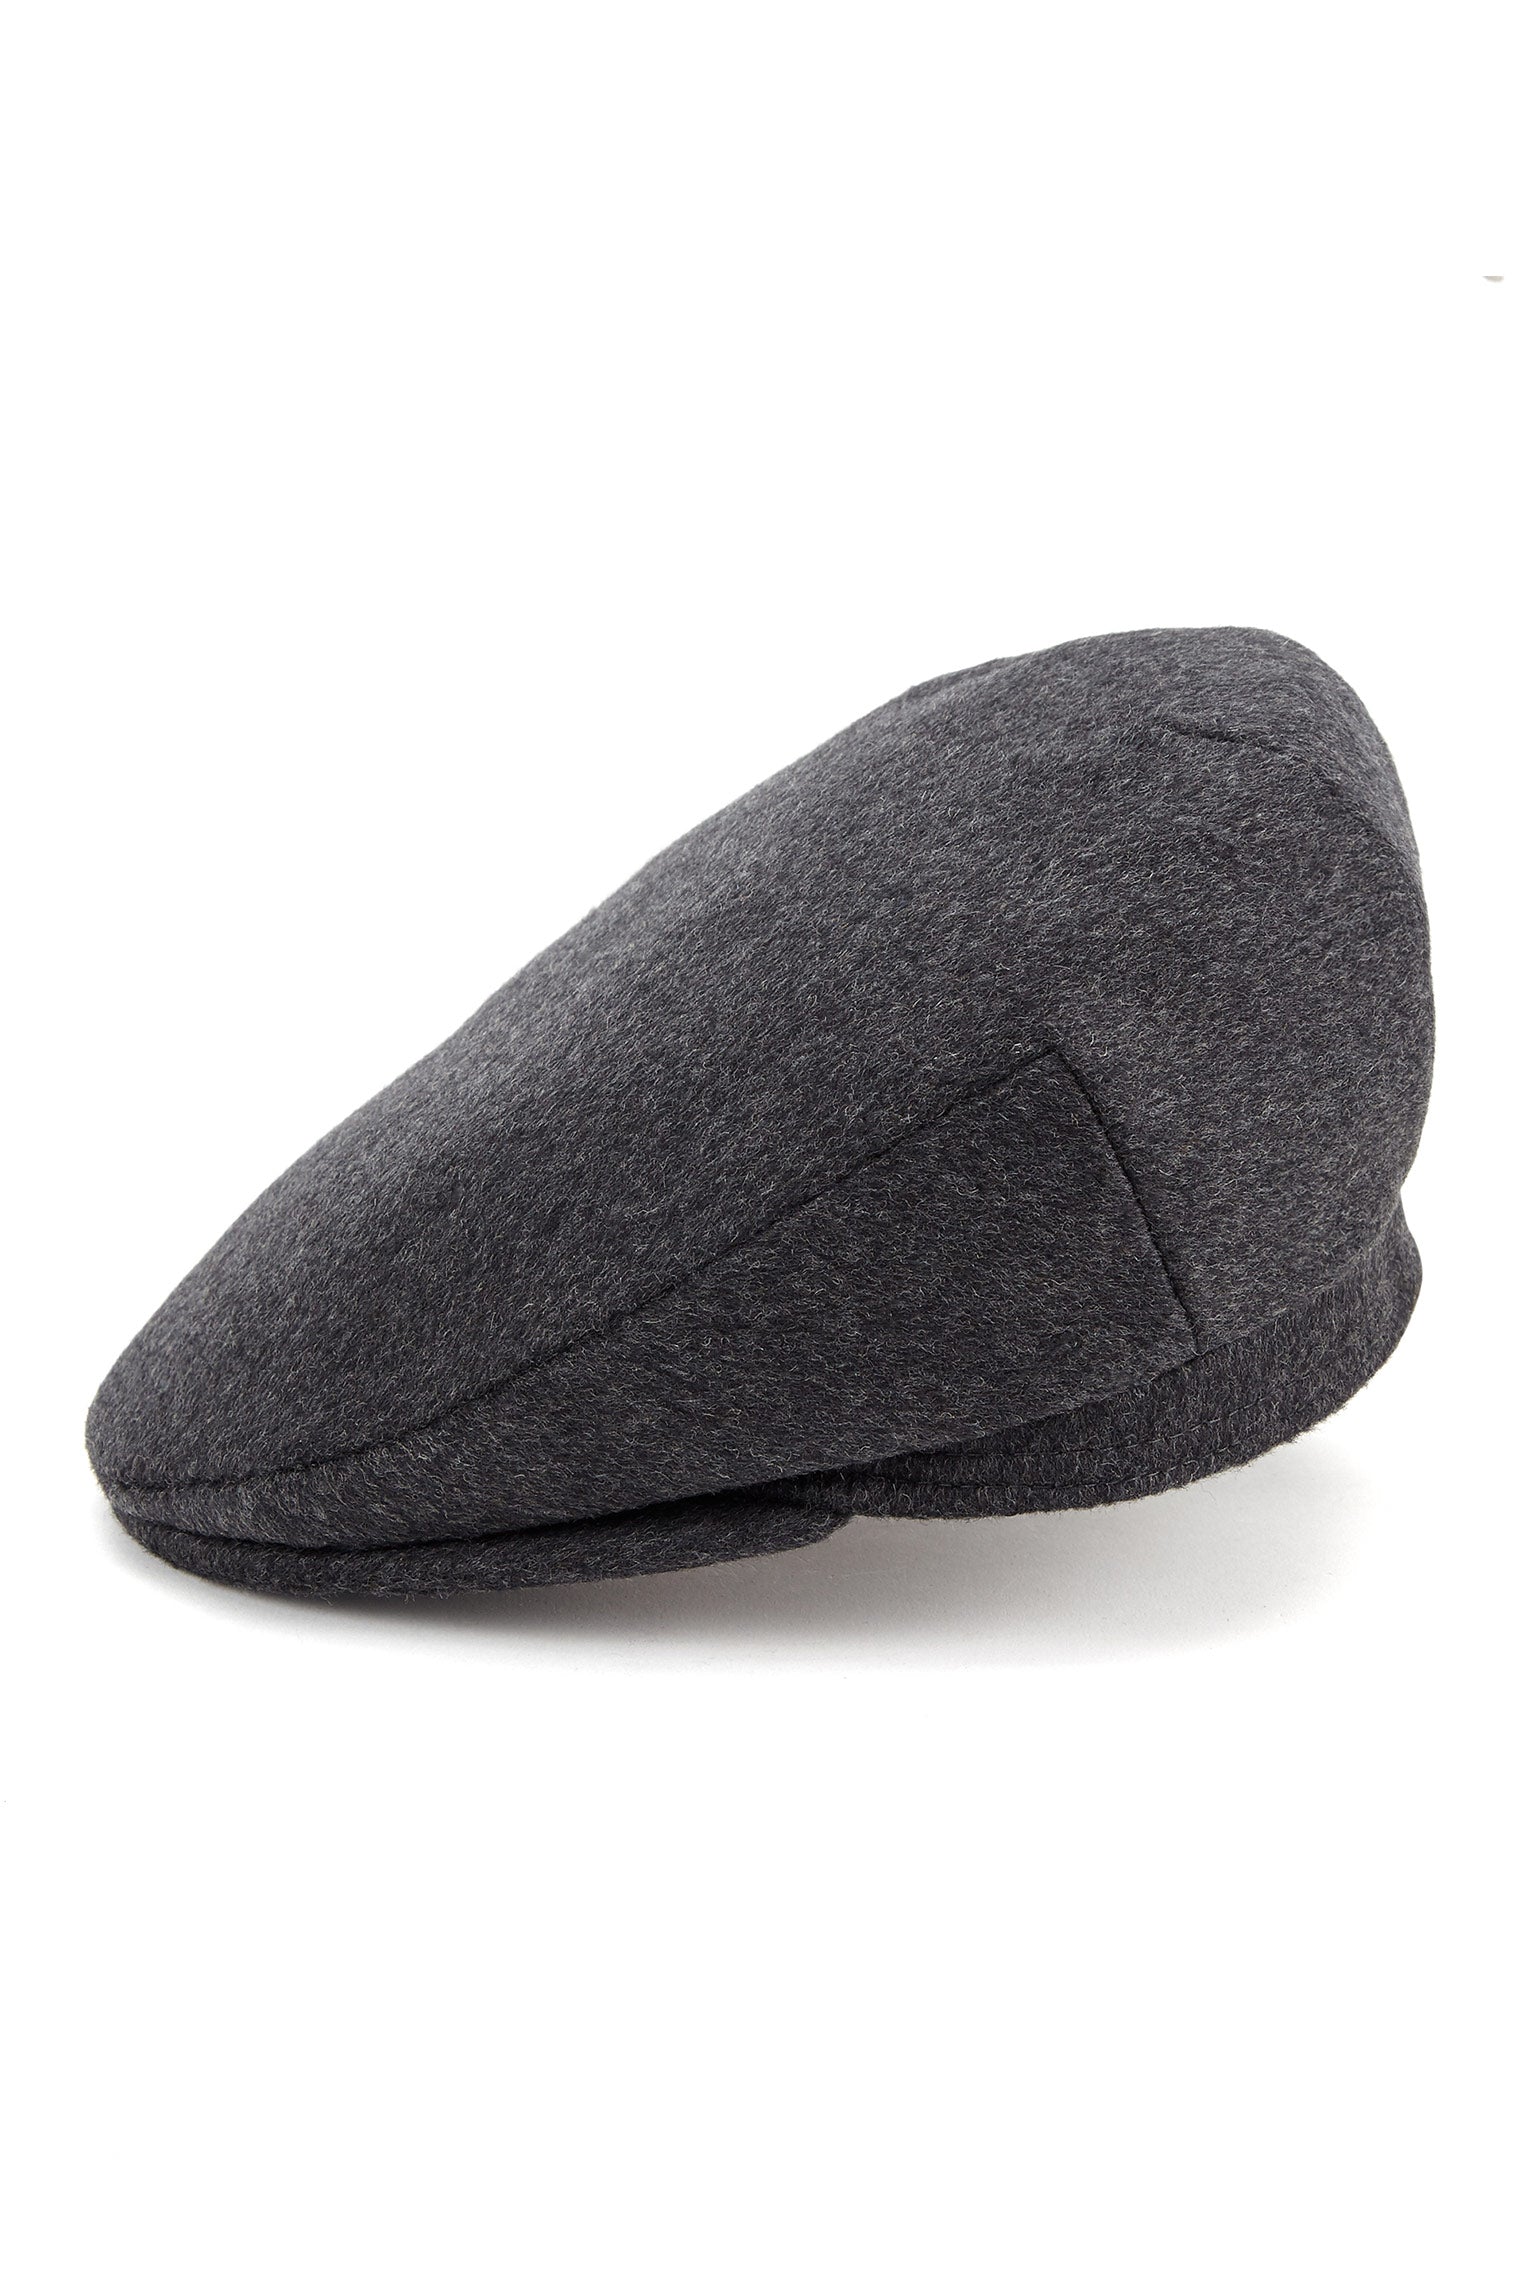 Oslo Tweed Flat Cap - Hats for Slimmer Frames - Lock & Co. Hatters London UK